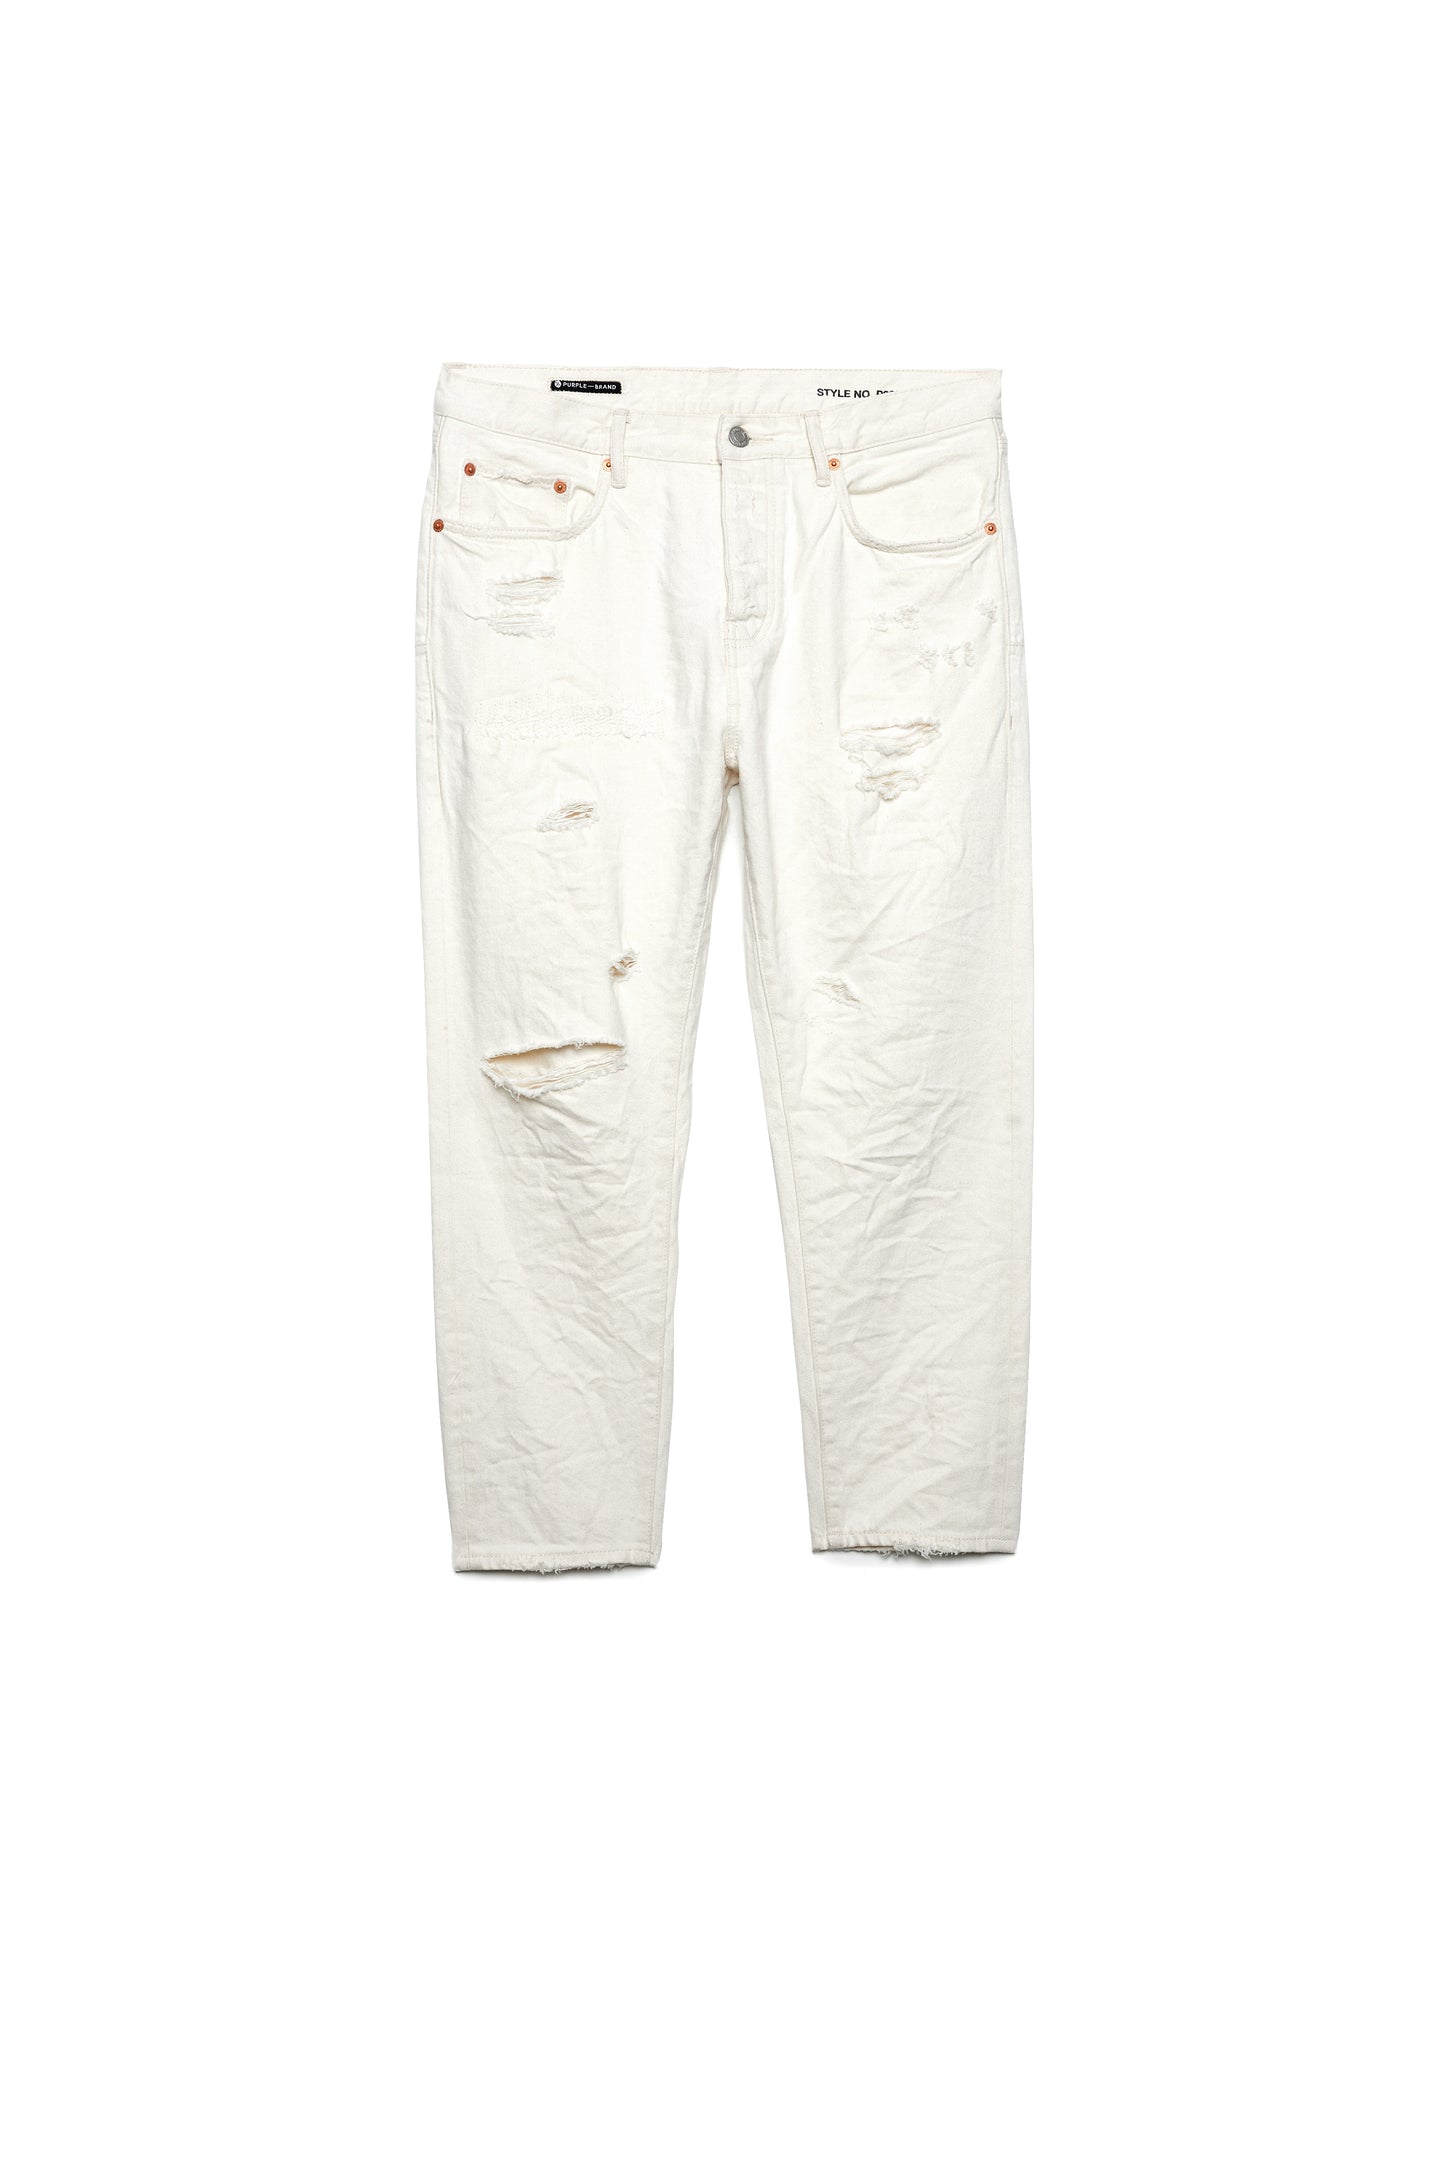 PURPLE BRAND - Men's Denim Jean - Long Rise Relaxed - Style No. P003 - White Vintage Distress Crop - Front